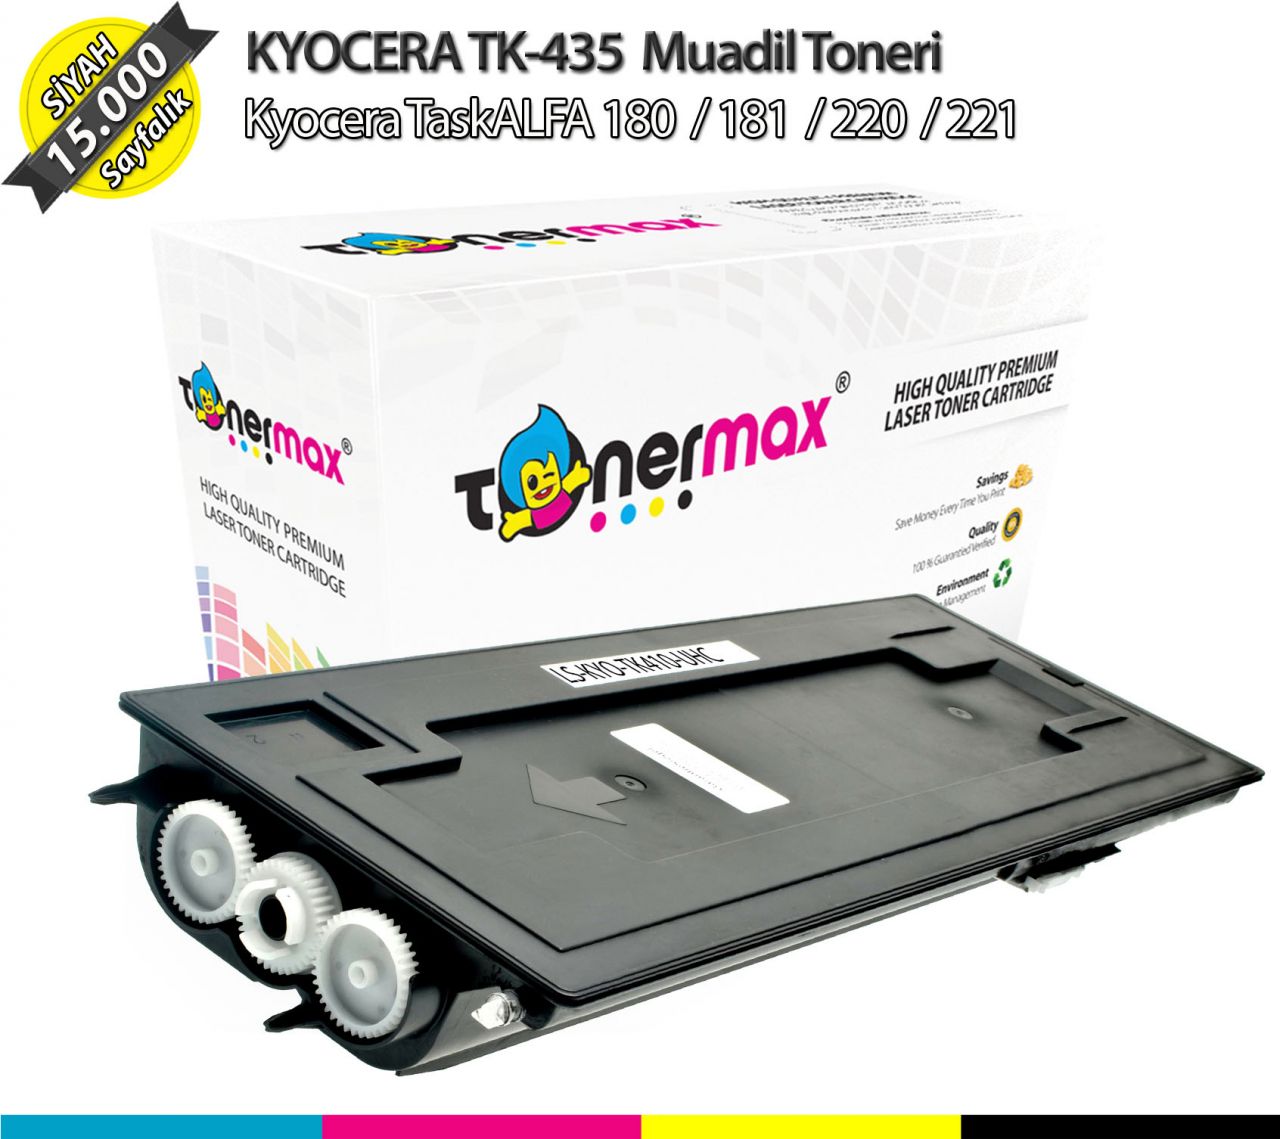 Kyocera TK-435 / TaskALFA 180 / 181 / 220 / 221 Muadil Toner - A Plus